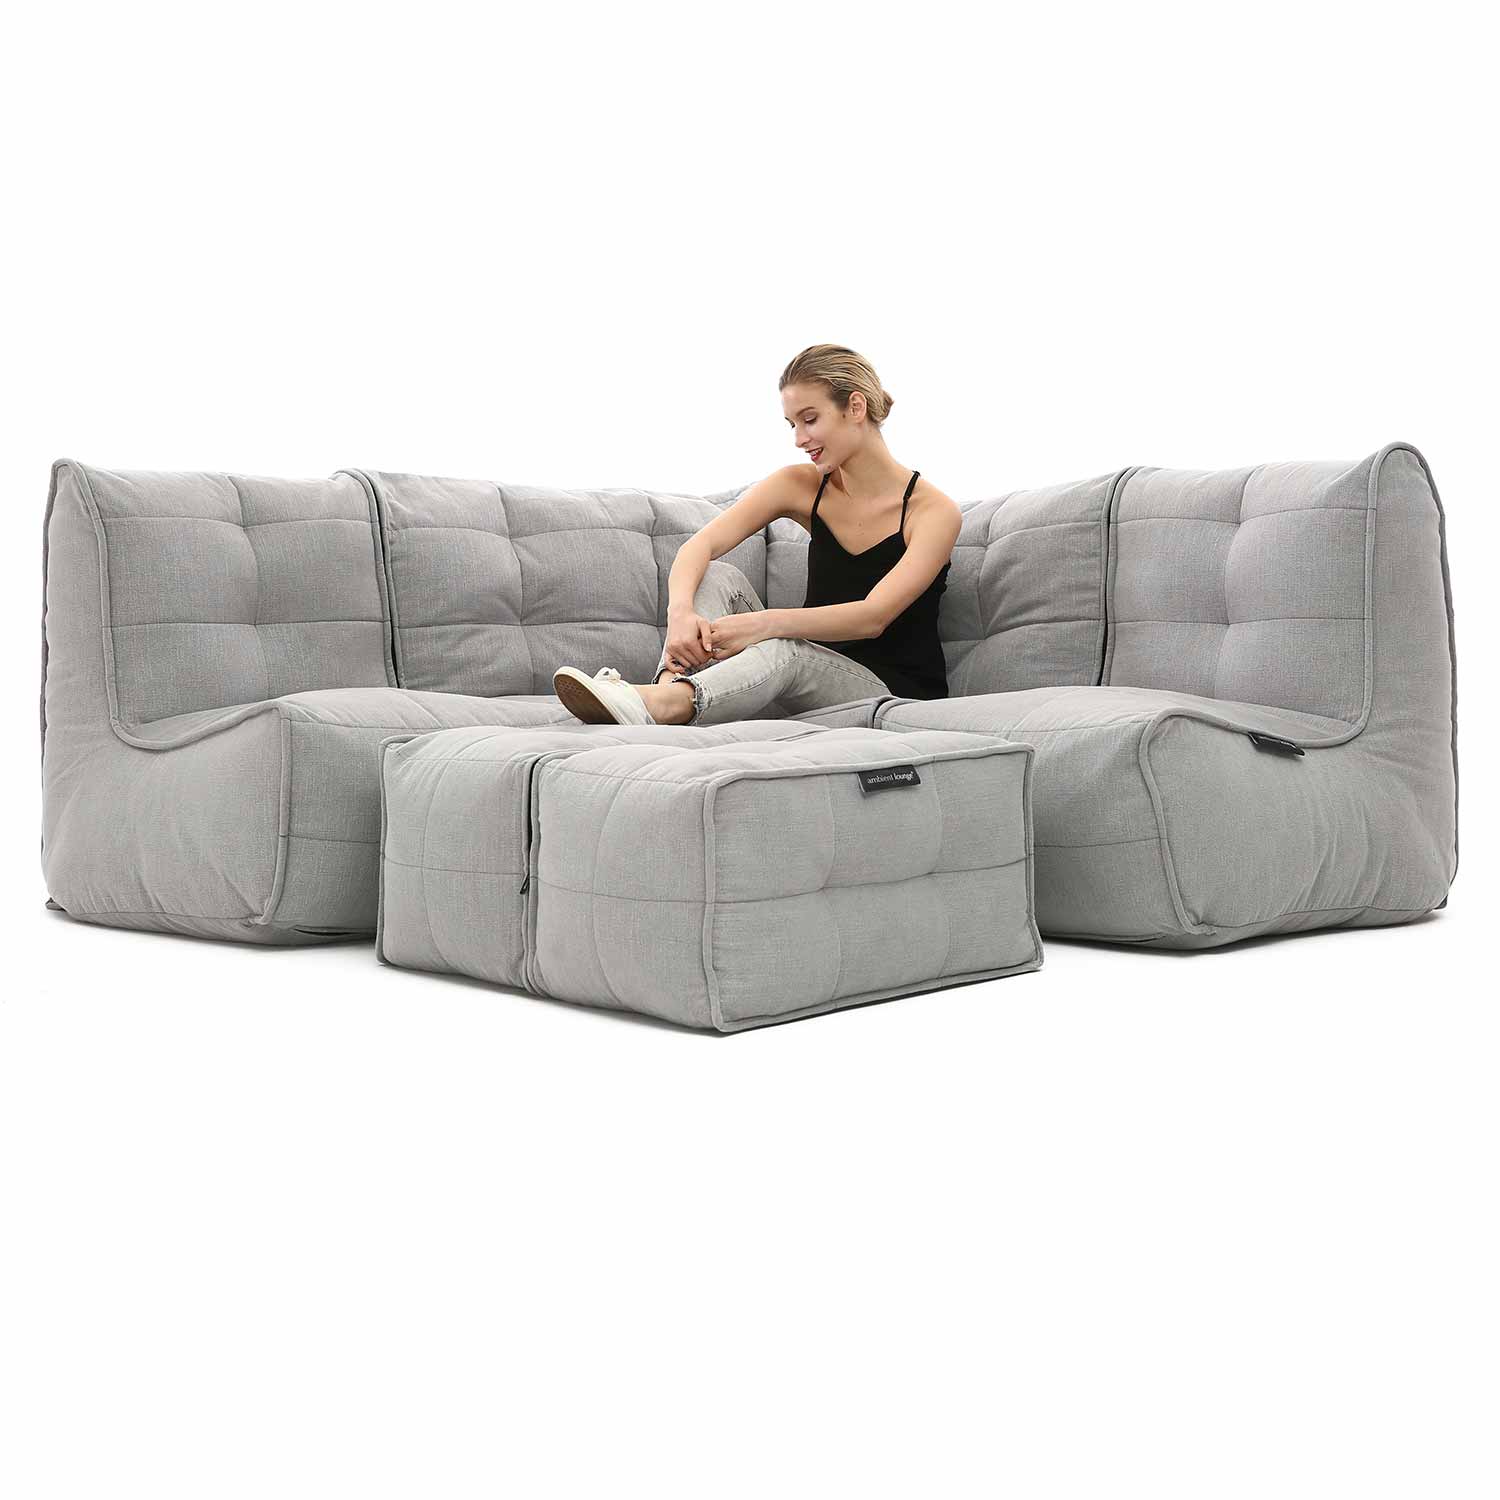 Heart soul lifestyles deluxe sofa